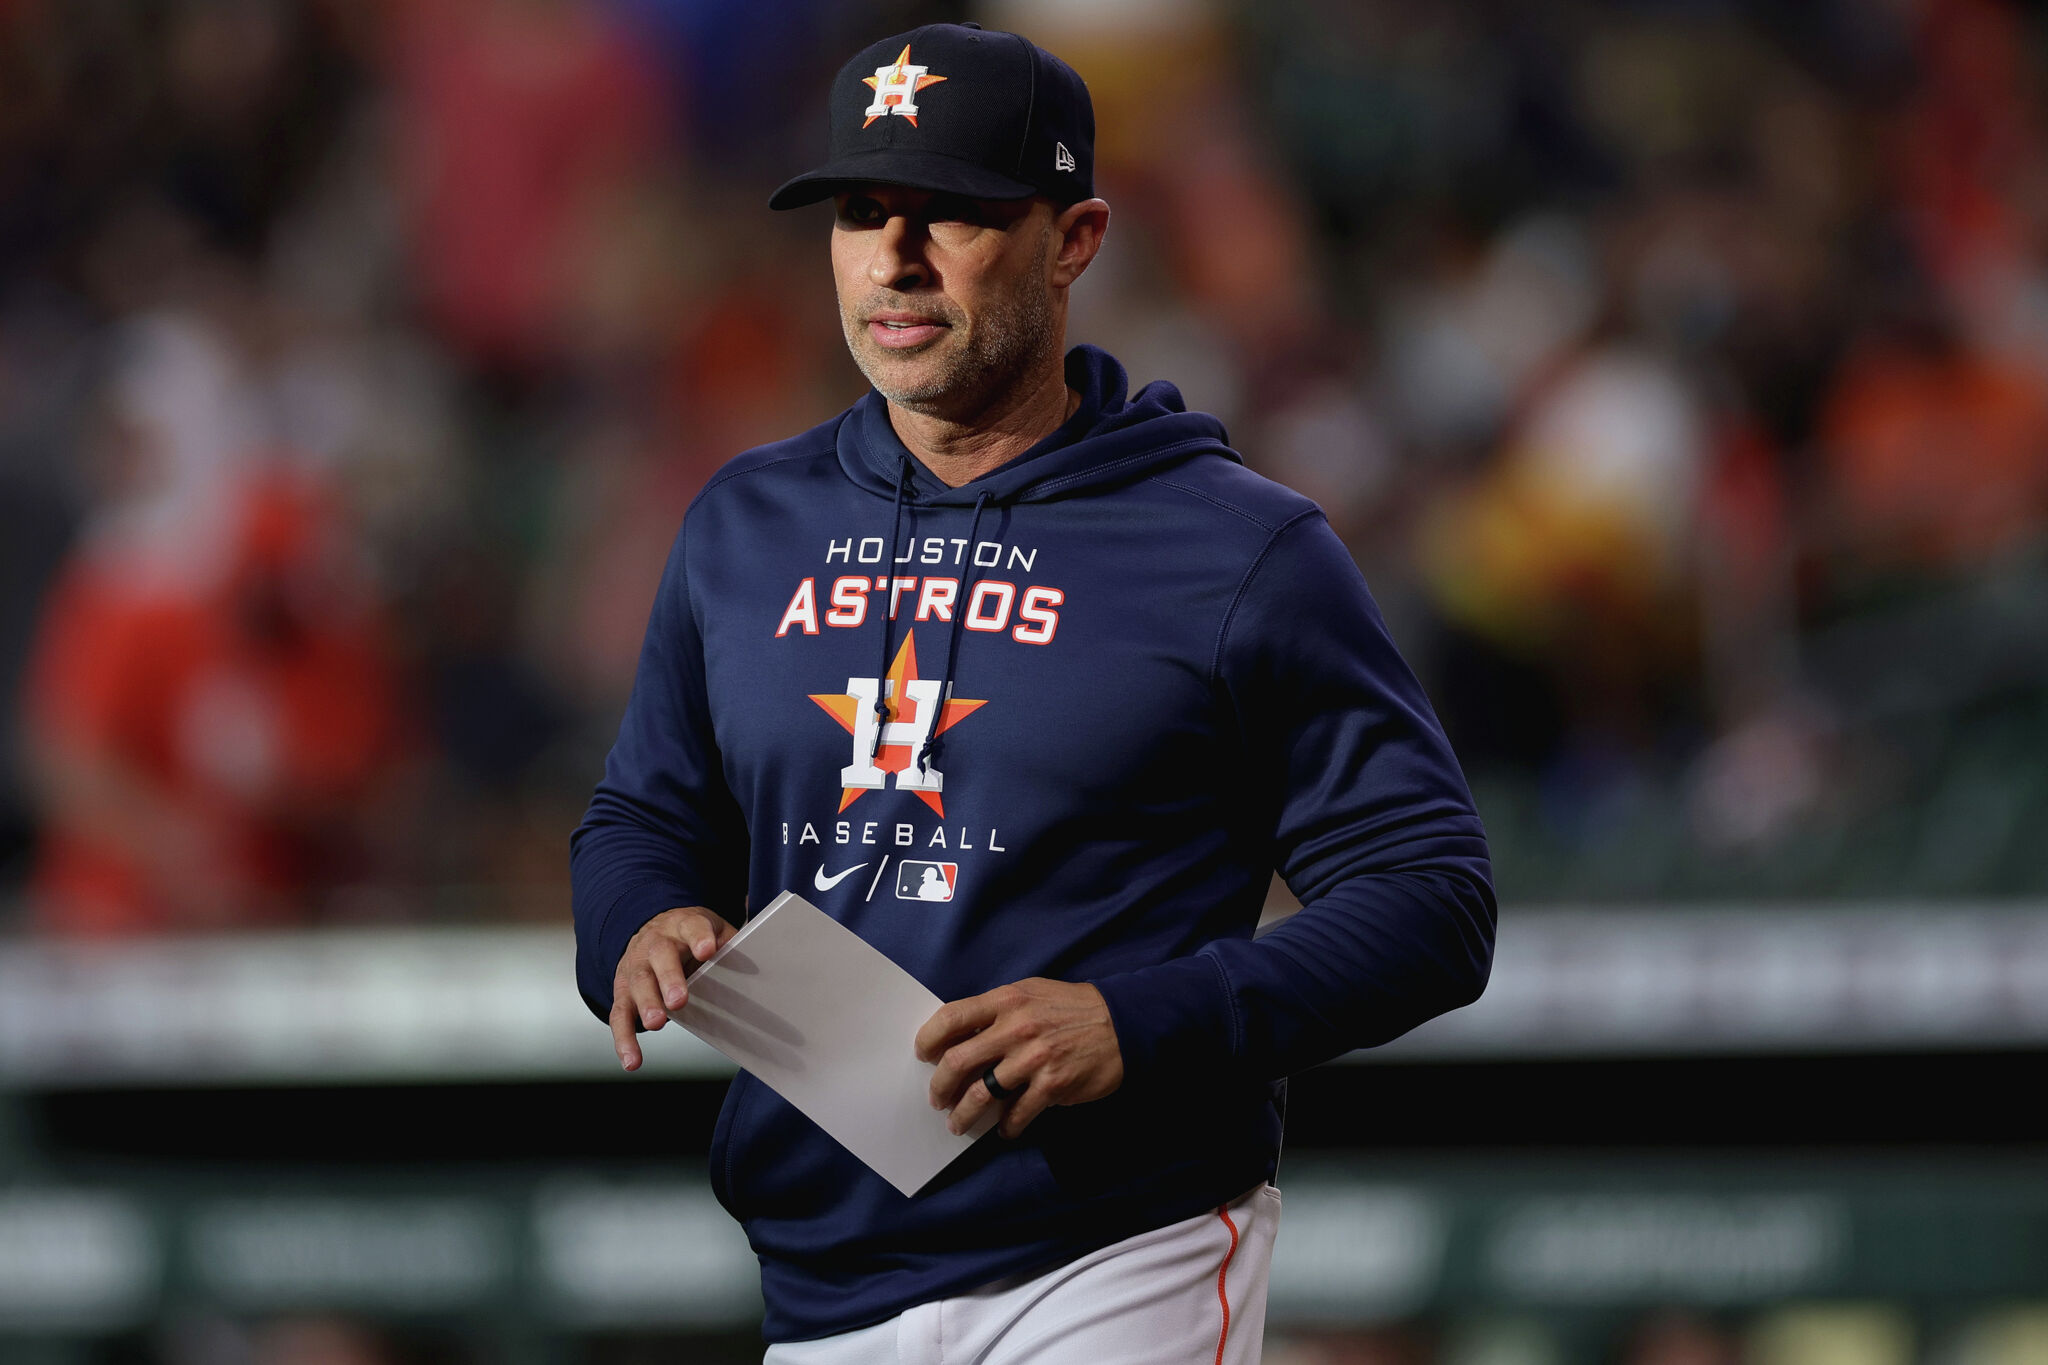 Houston Astros manager candidates: Who is Joe Espada?